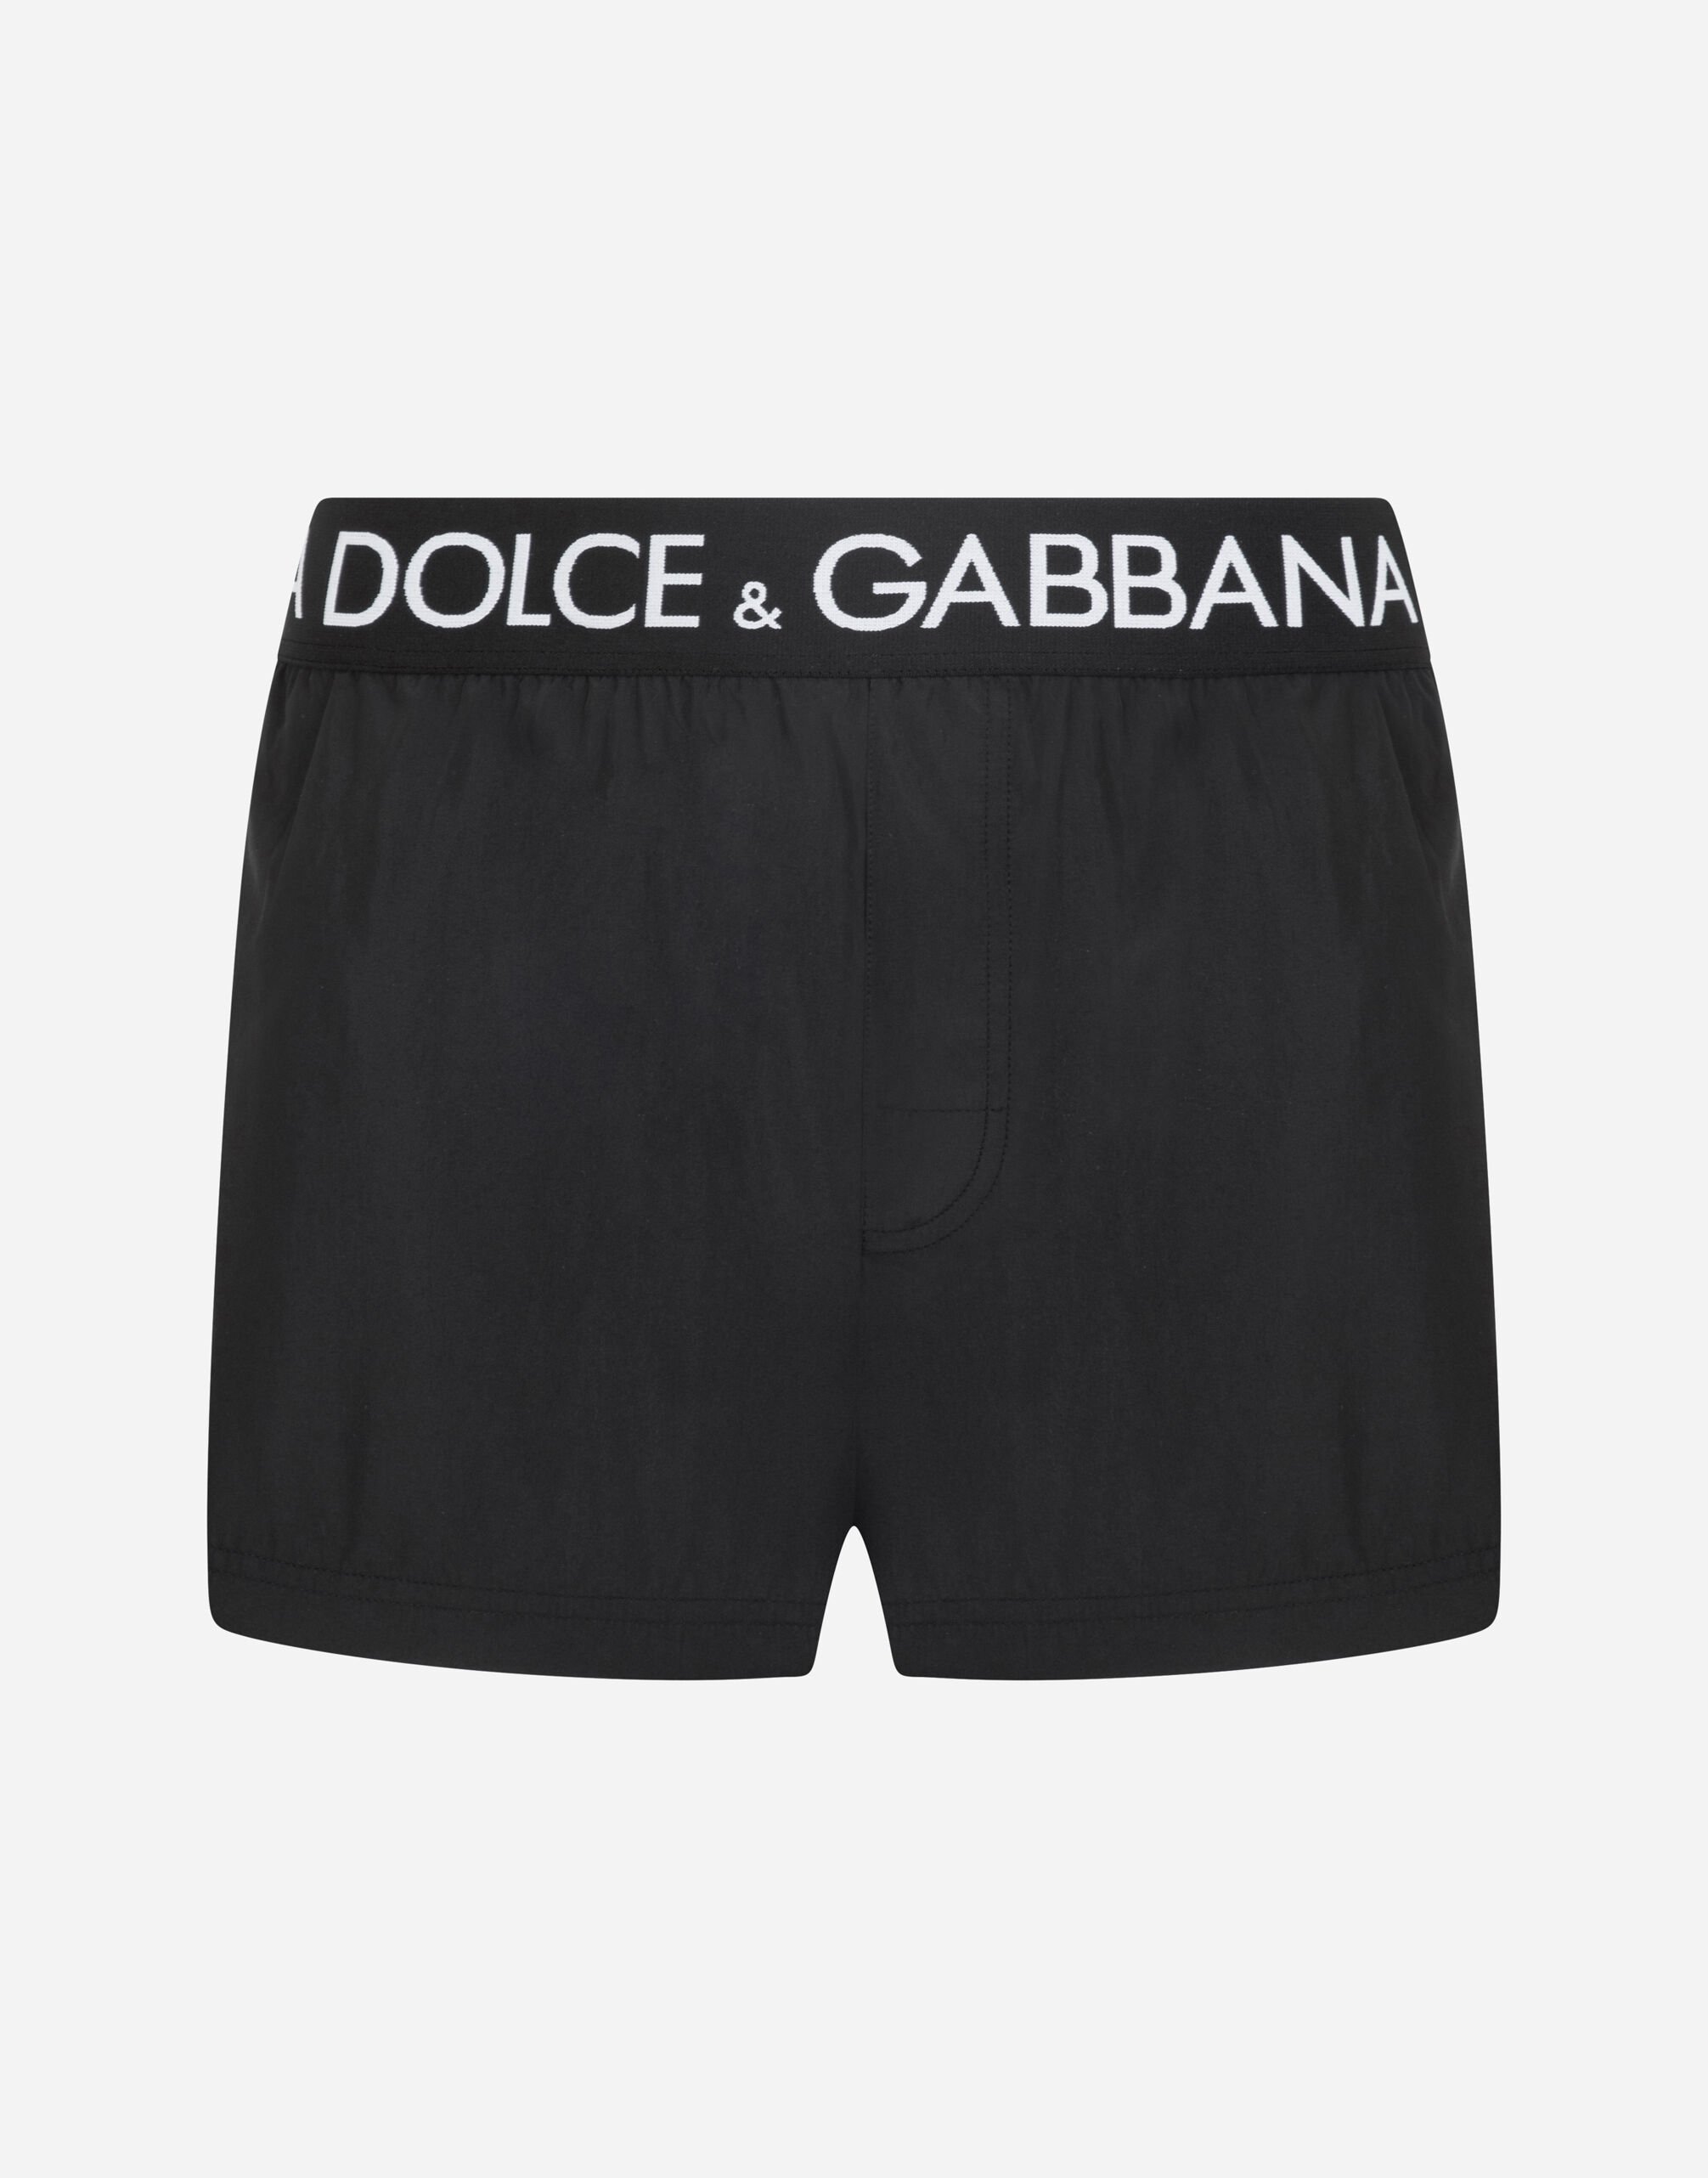 Dolce & Gabbana ビーチボクサー ショート ロゴウエストバンド ブラック G8PB0TFU7AV